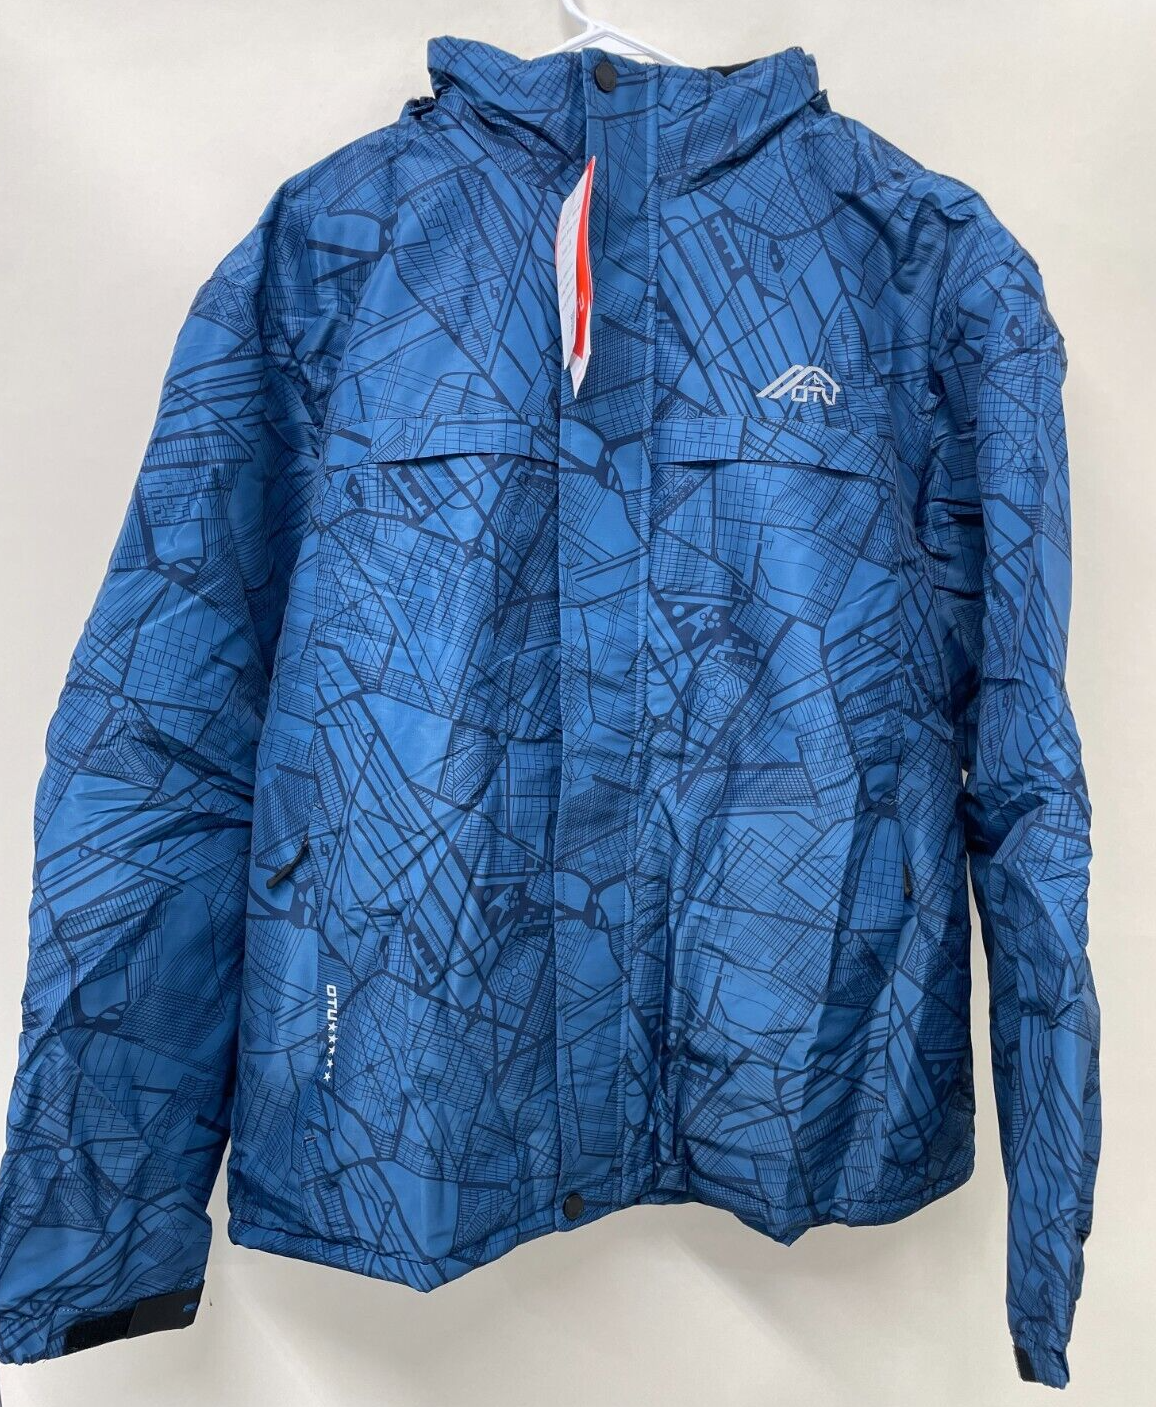 OTU Mens XL Waterproof Ski Jacket A-Dark Blue City Snowboarding Snow Coat 589-AB